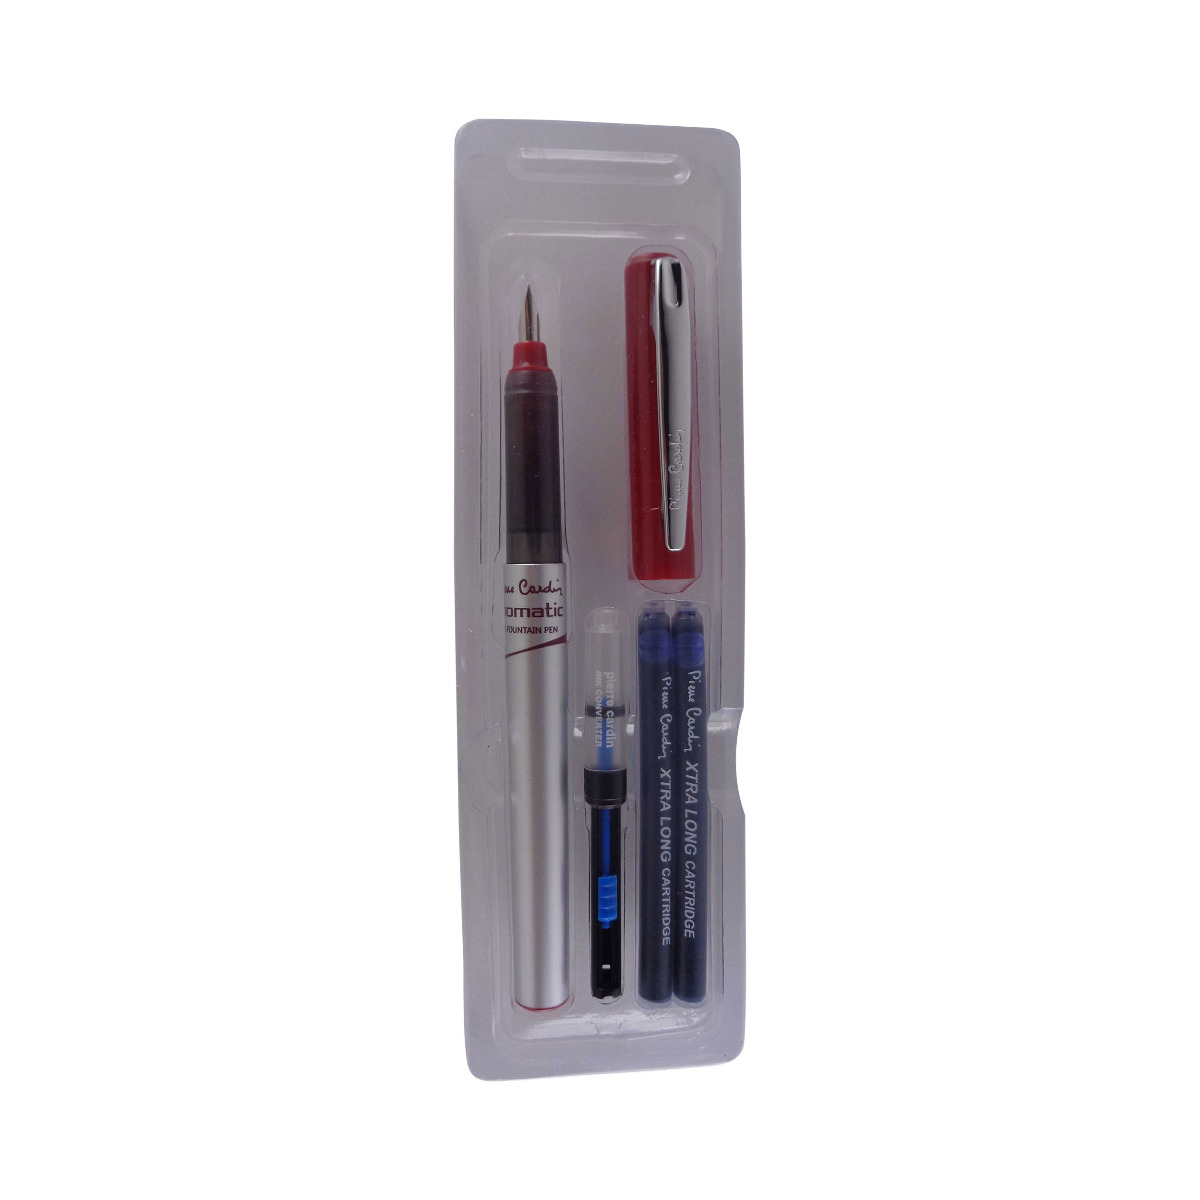 Pierre cardin Model: 13620 PenOmatic Grey color body Red color cap cartridge Fountain pen with a convertor